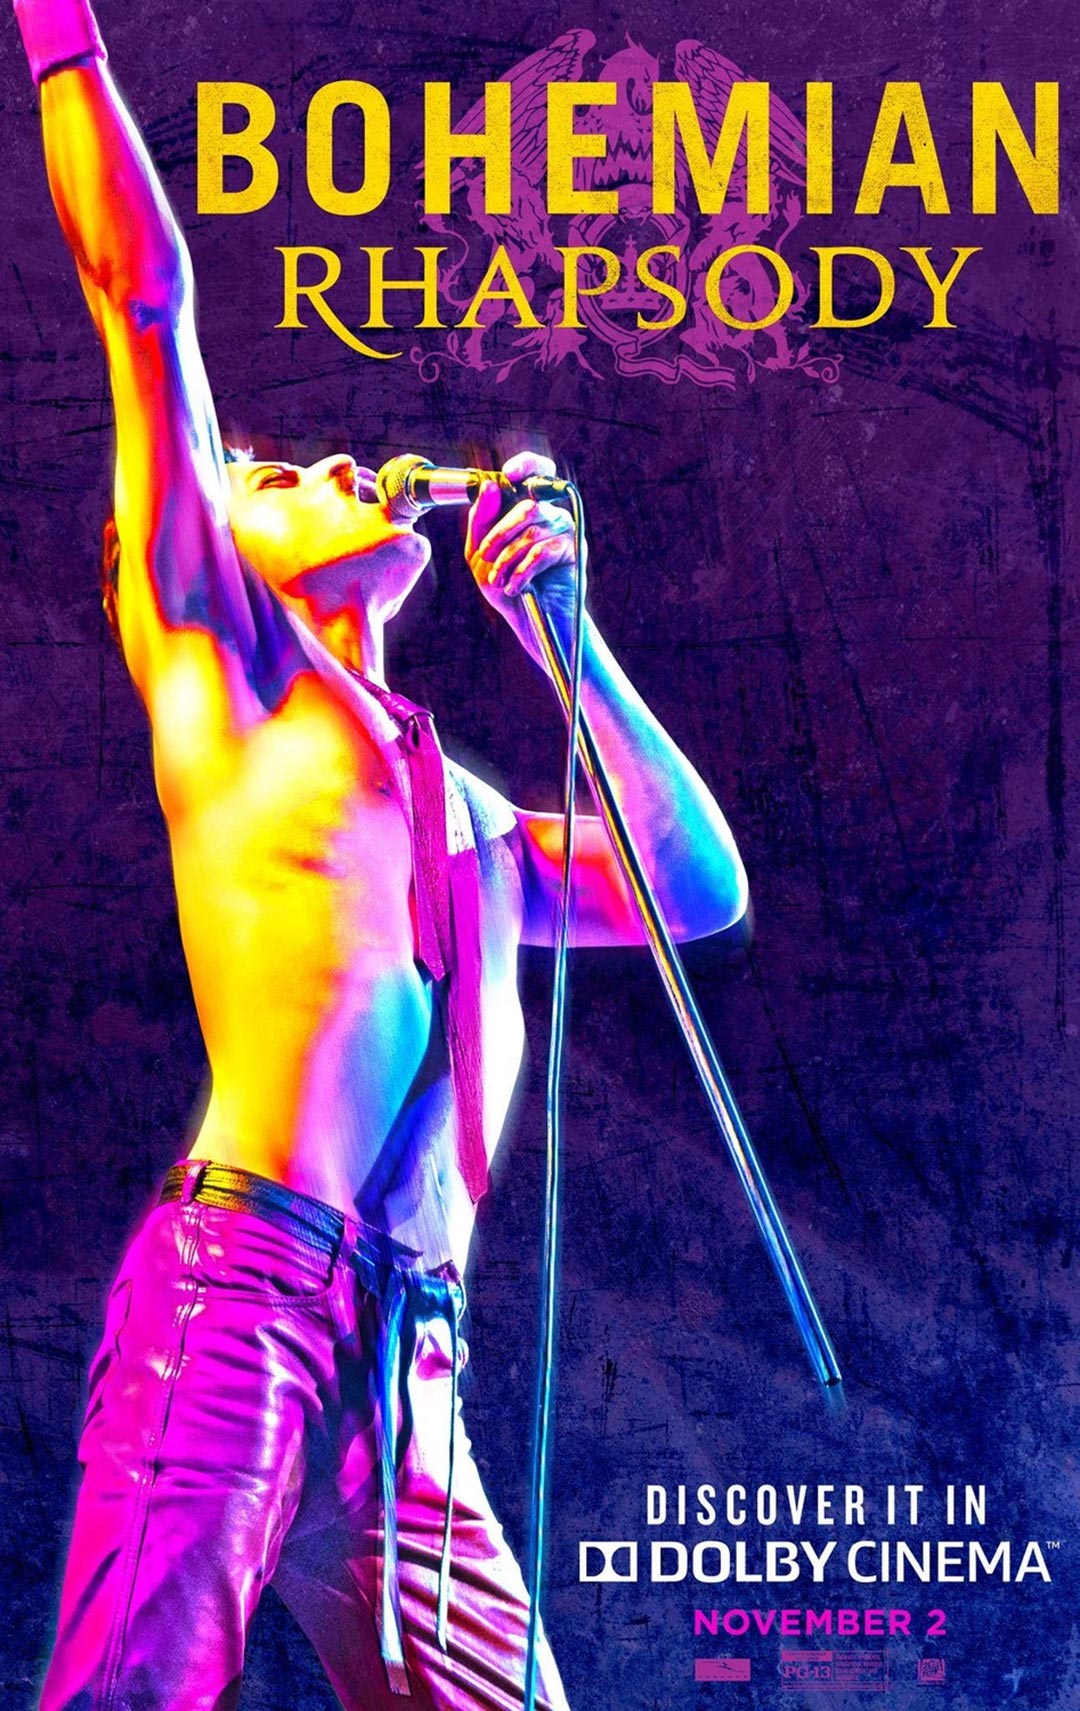 Bohemian Rhapsody (2018) Poster #2 - Trailer Addict